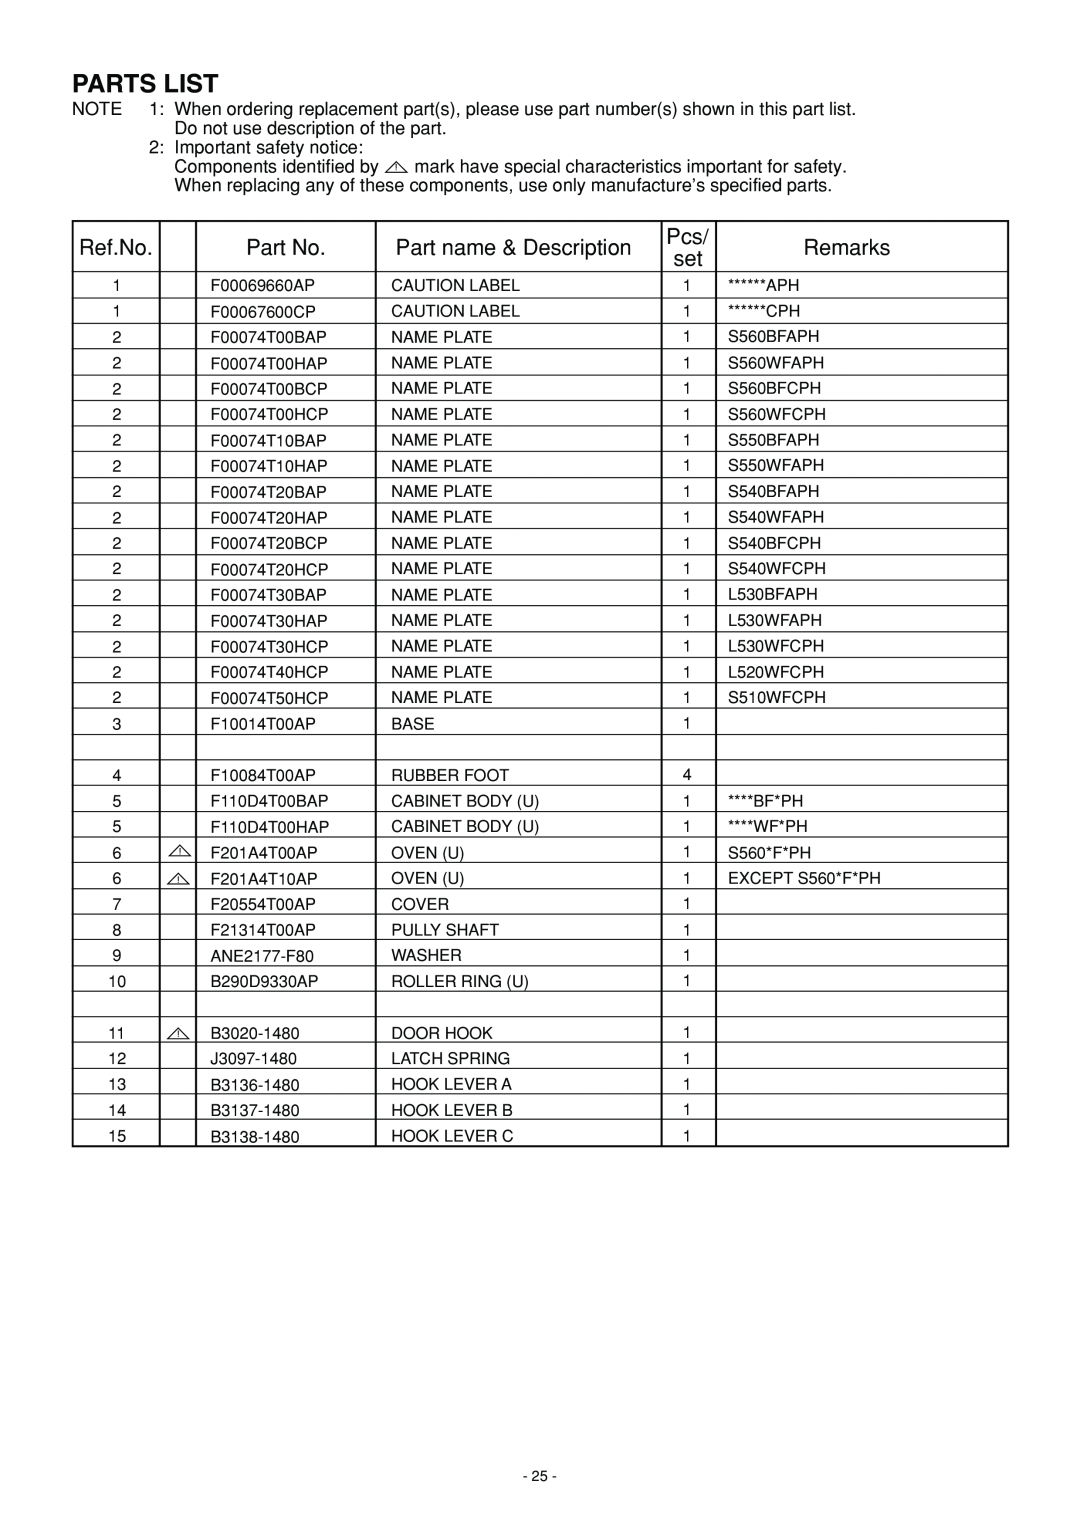 Panasonic NN-L530BF, NN-S560BF, NN-S560WF service manual Parts List, Ref.No, Part name & Description, Remarks 